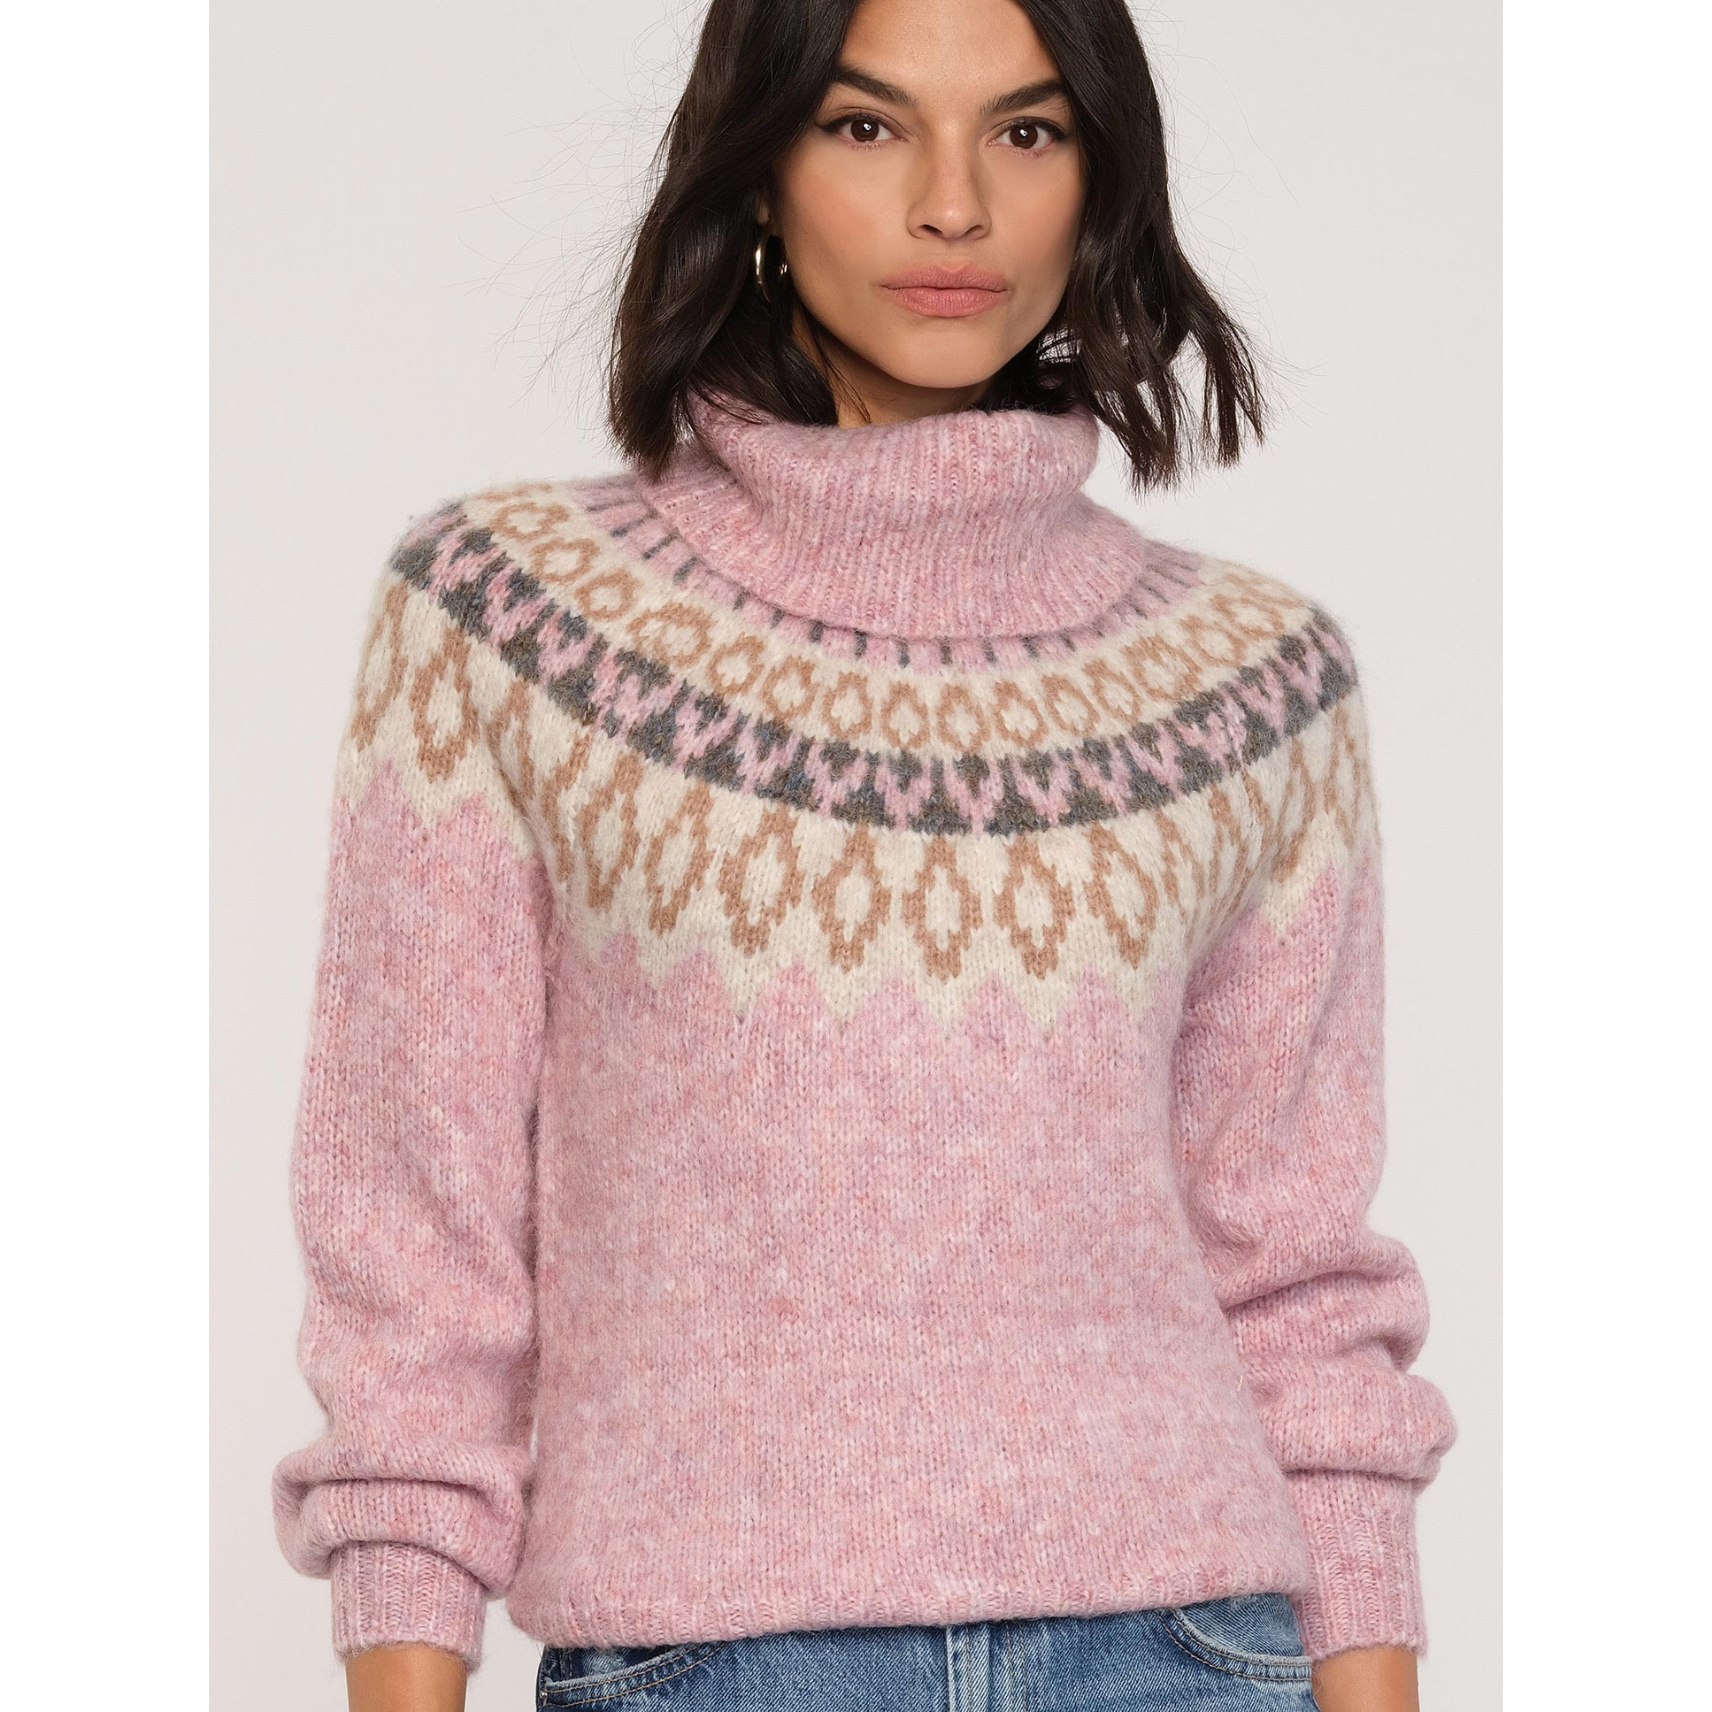 Heartloom - Eryk Sweater in Lilac-SQ1071133